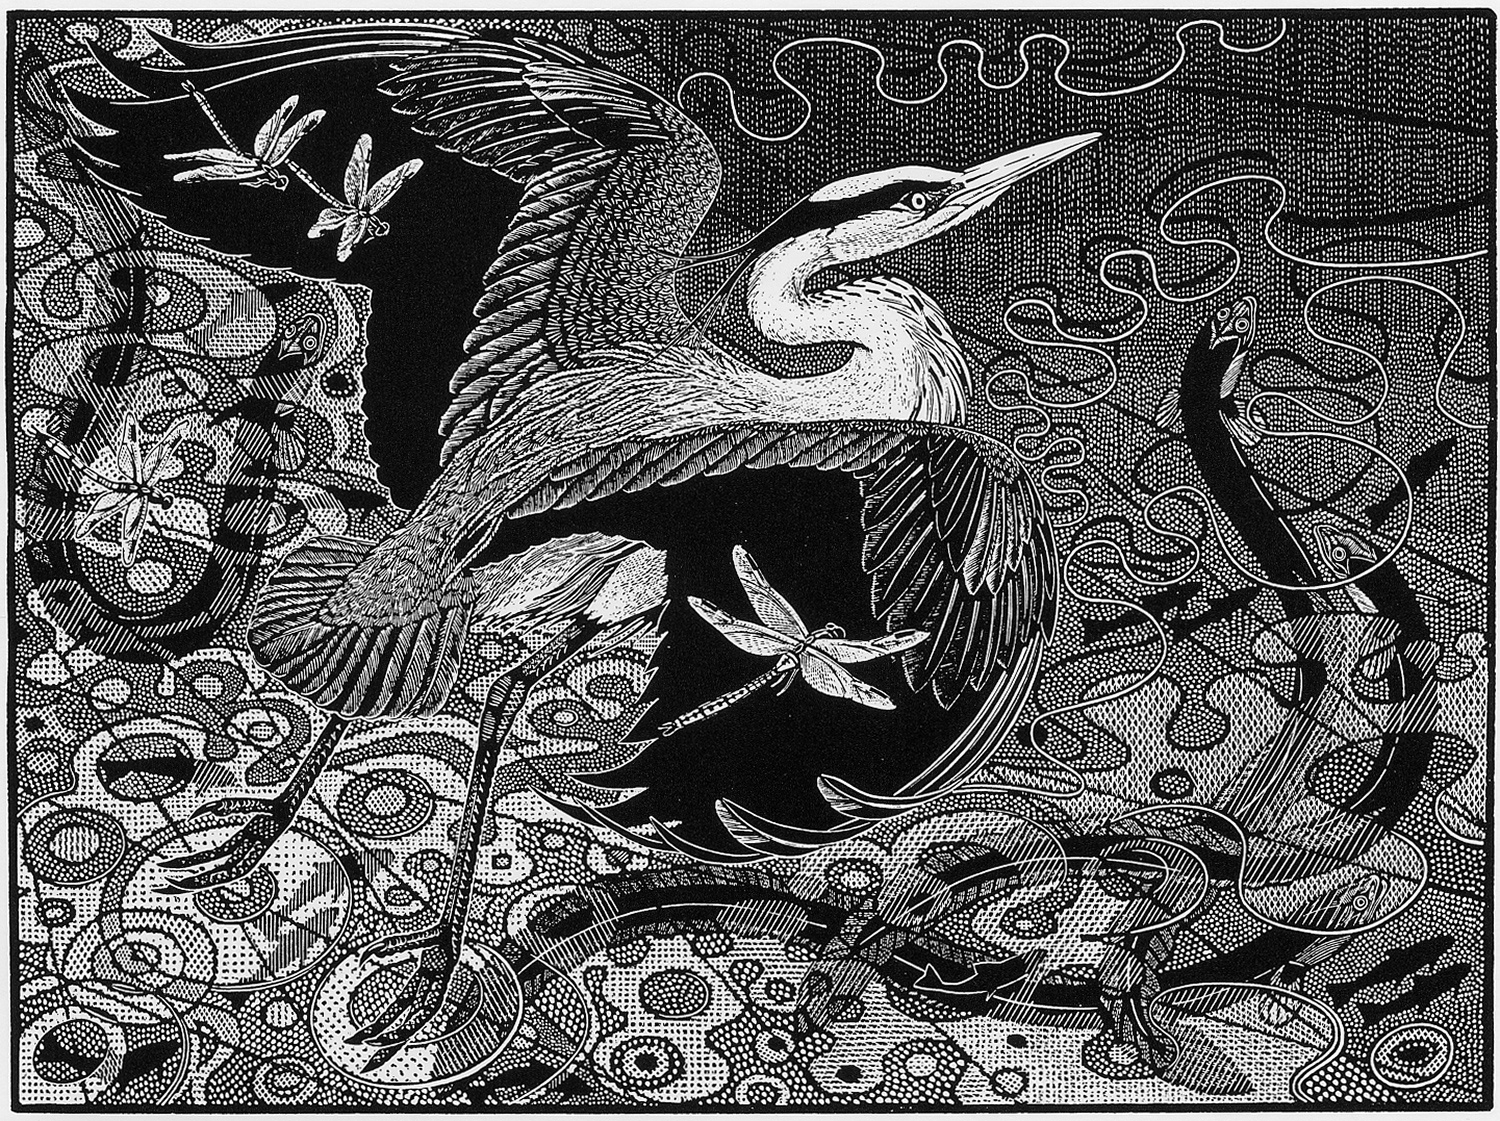 Grey Heron & Eel by Colin See-Paynton